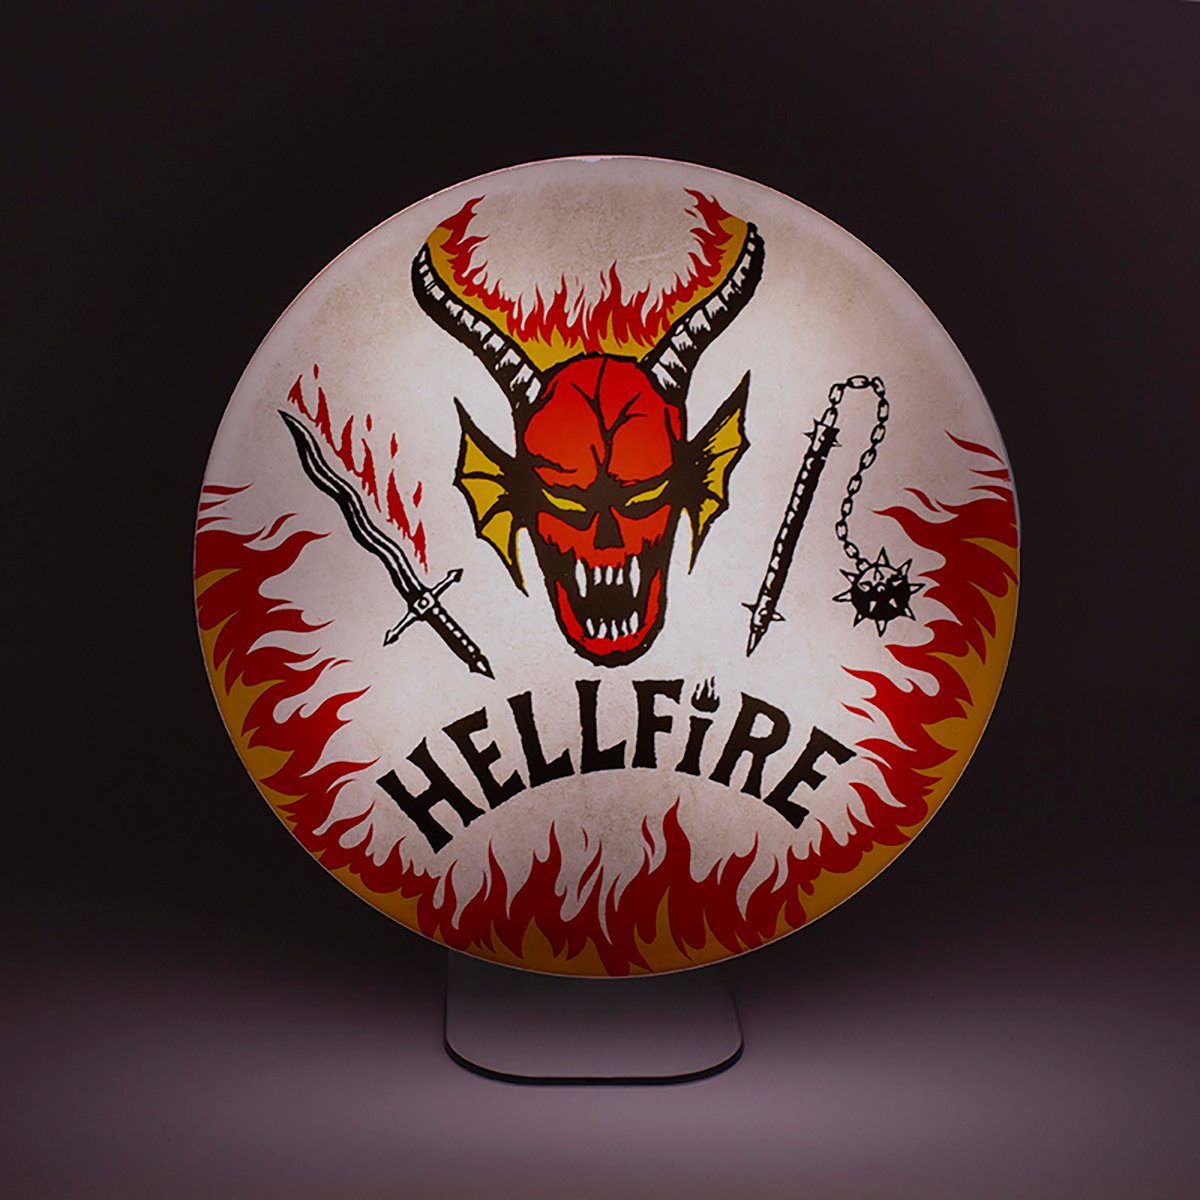 Paladone Stehlampe Club Lampe Hellfire LED Things Stranger Logo